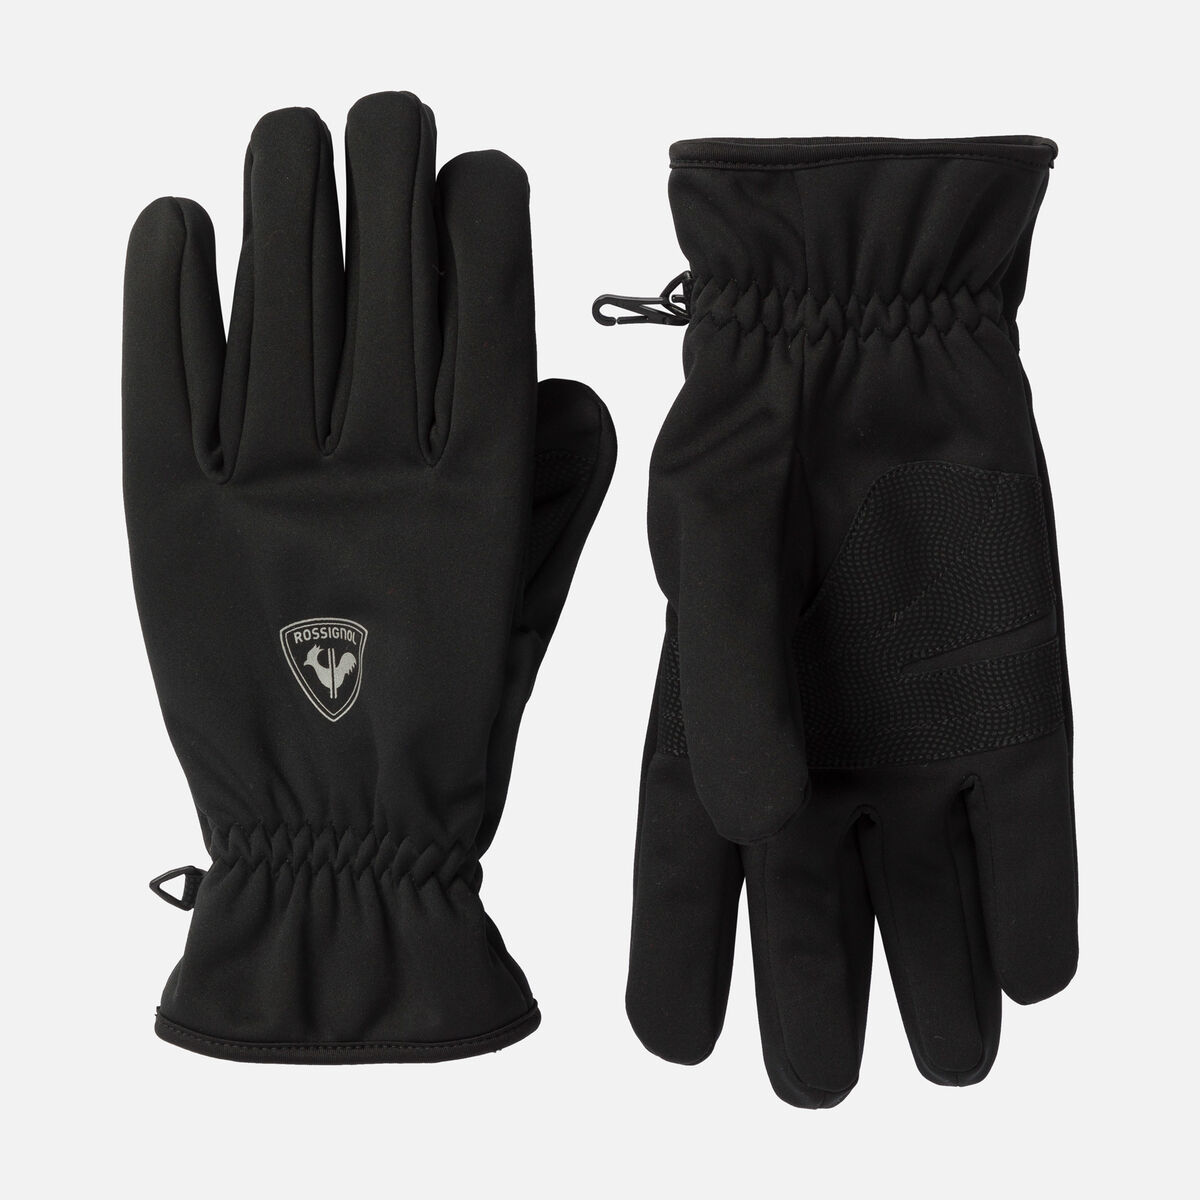 Rossignol Men's XC Soft Shell Ski Gloves Black